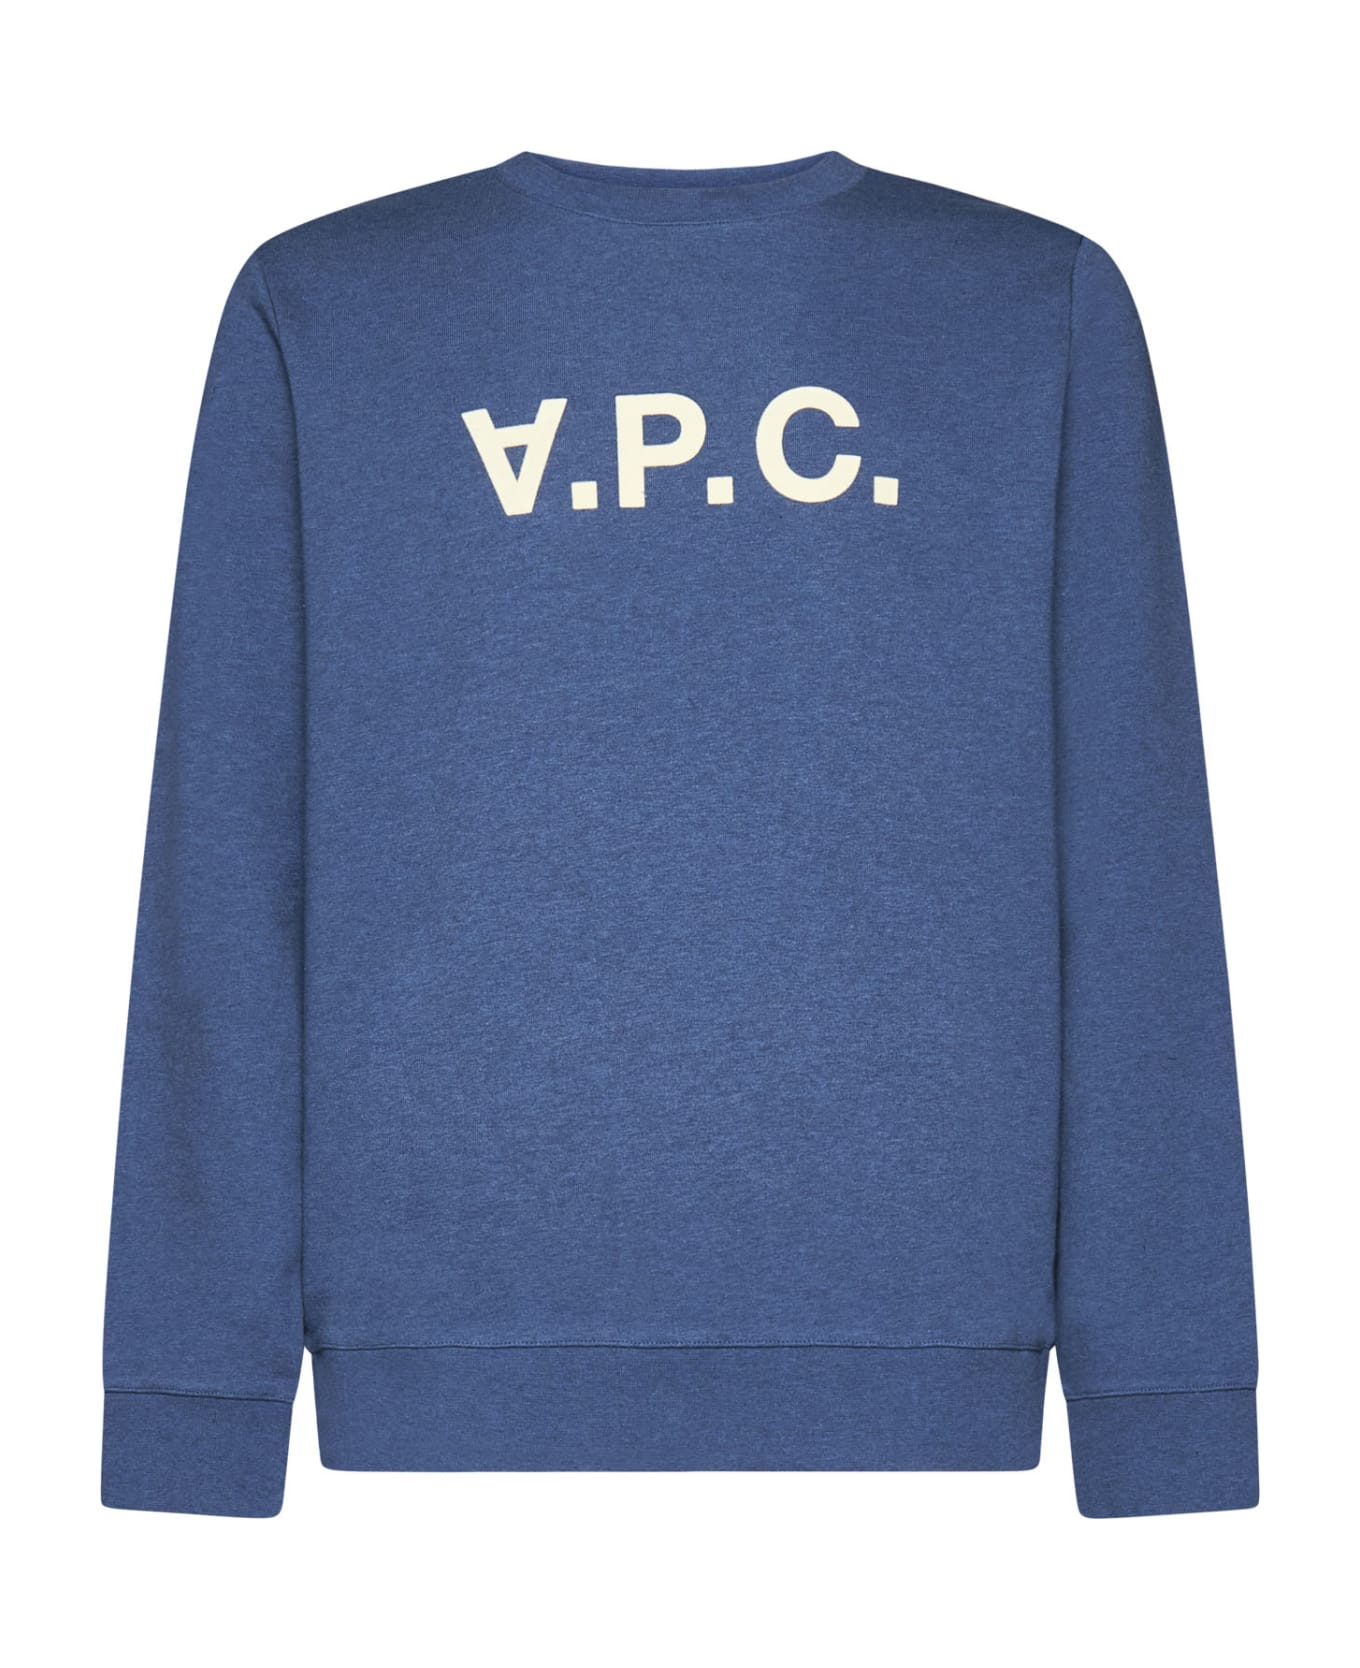 A.P.C. Apc Sweatshirt - Indigo